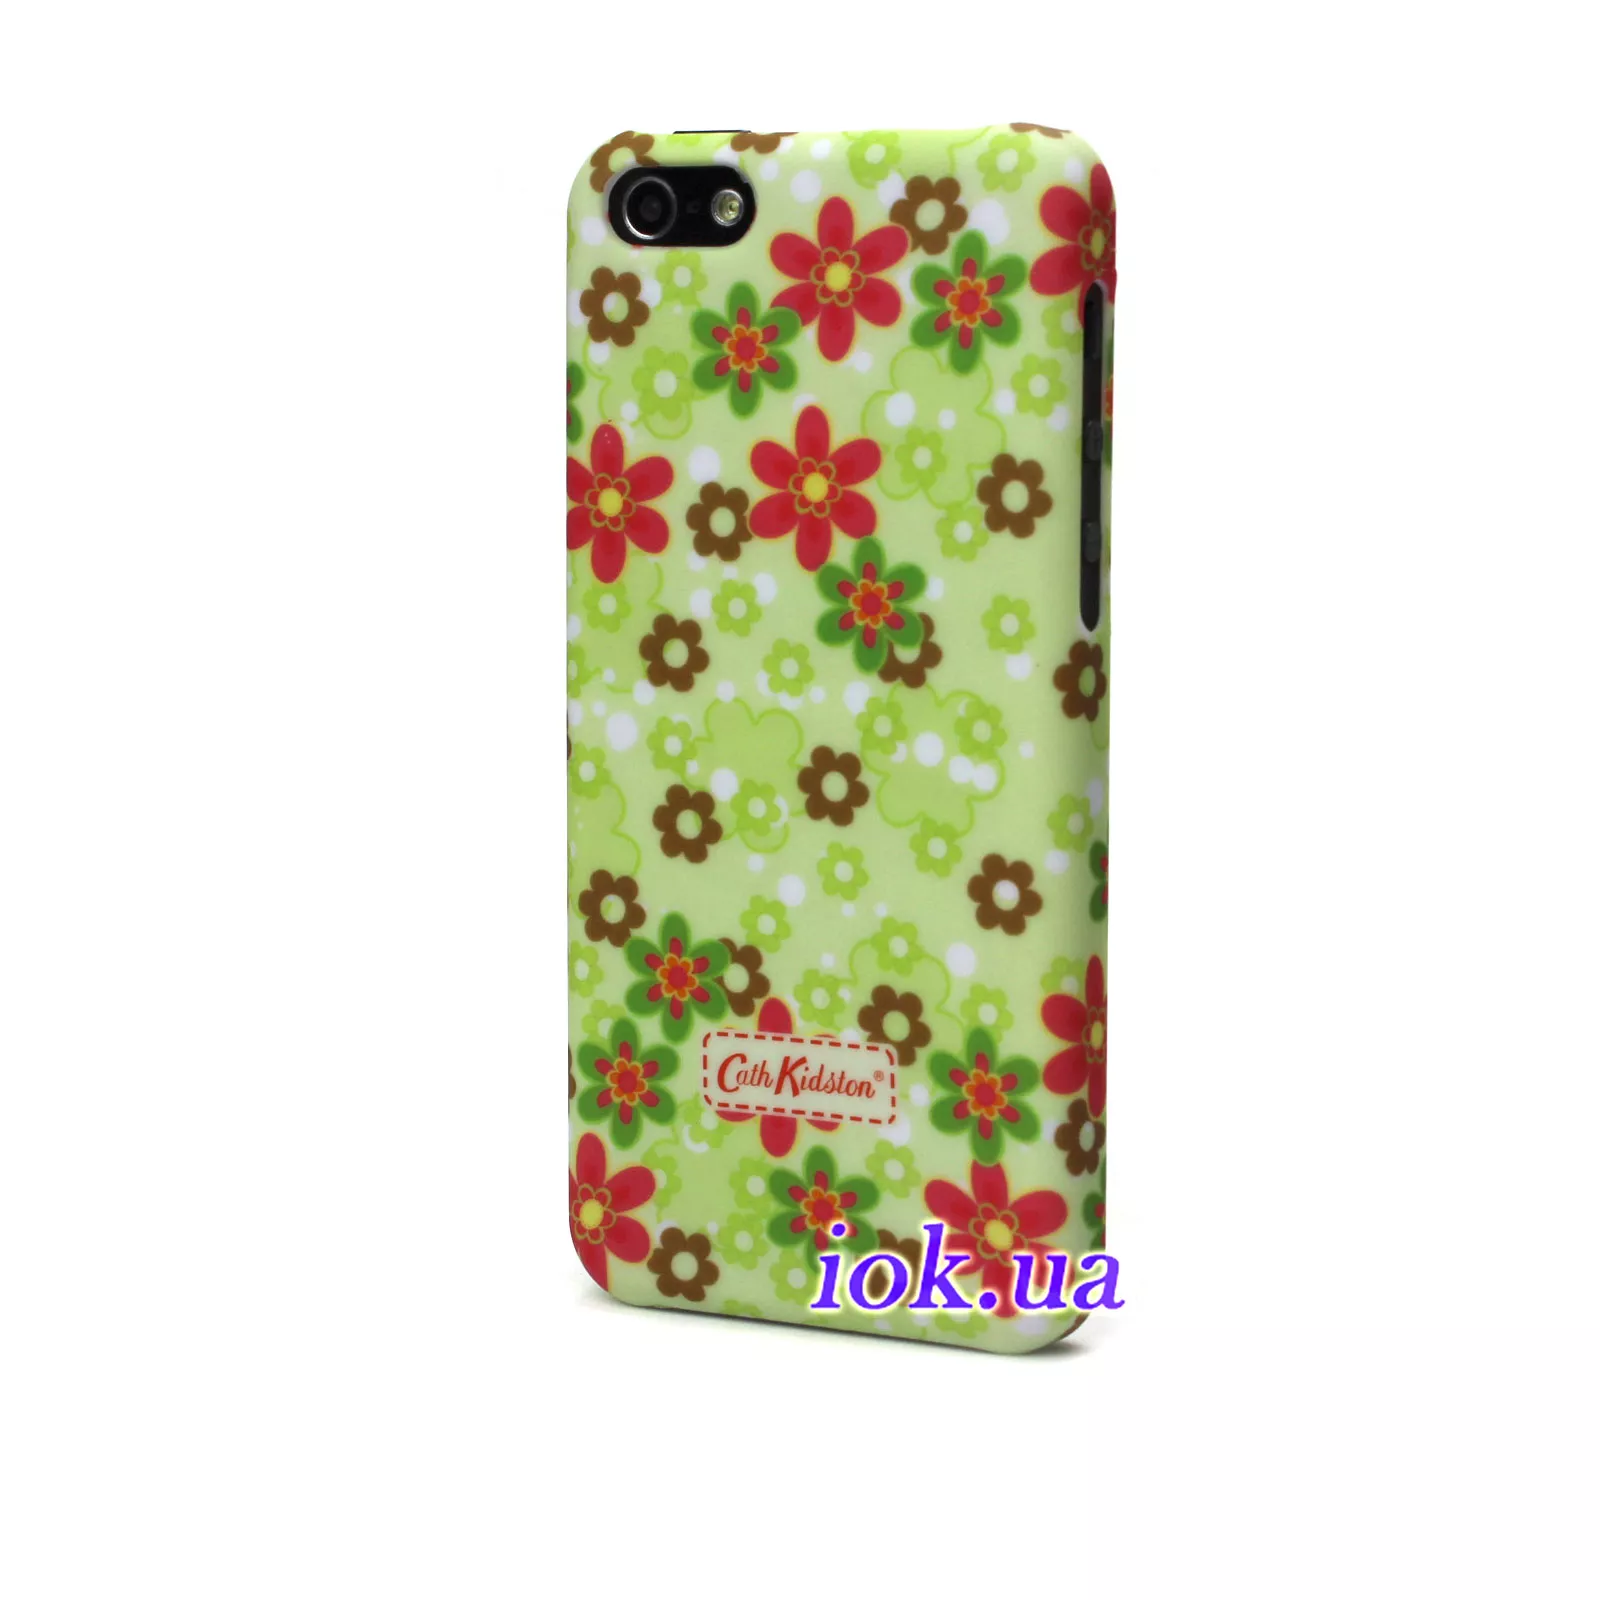 Женский чехол Cath Kidston для iPhone 5C - Flowers 29